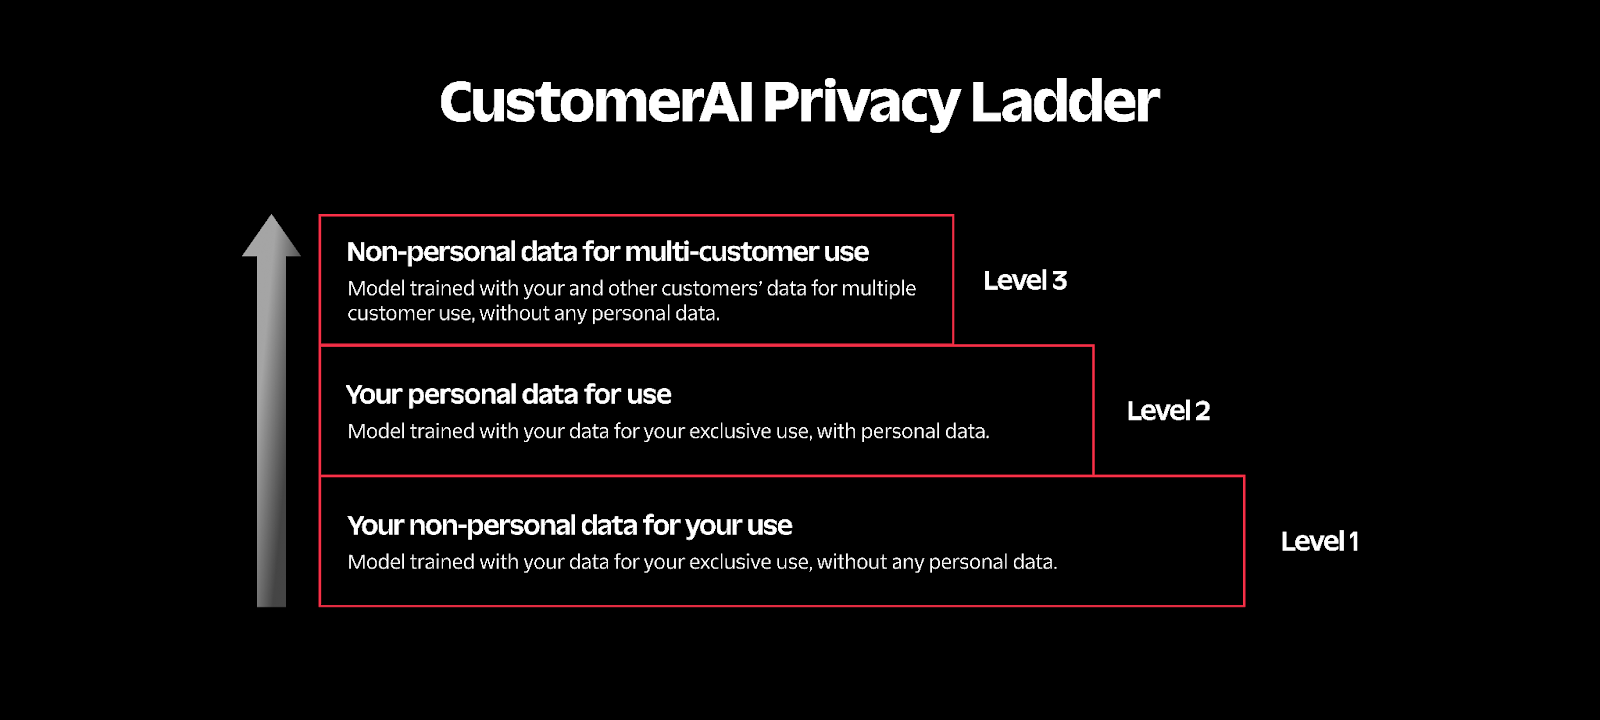 CustomerAi Privacy Ladder